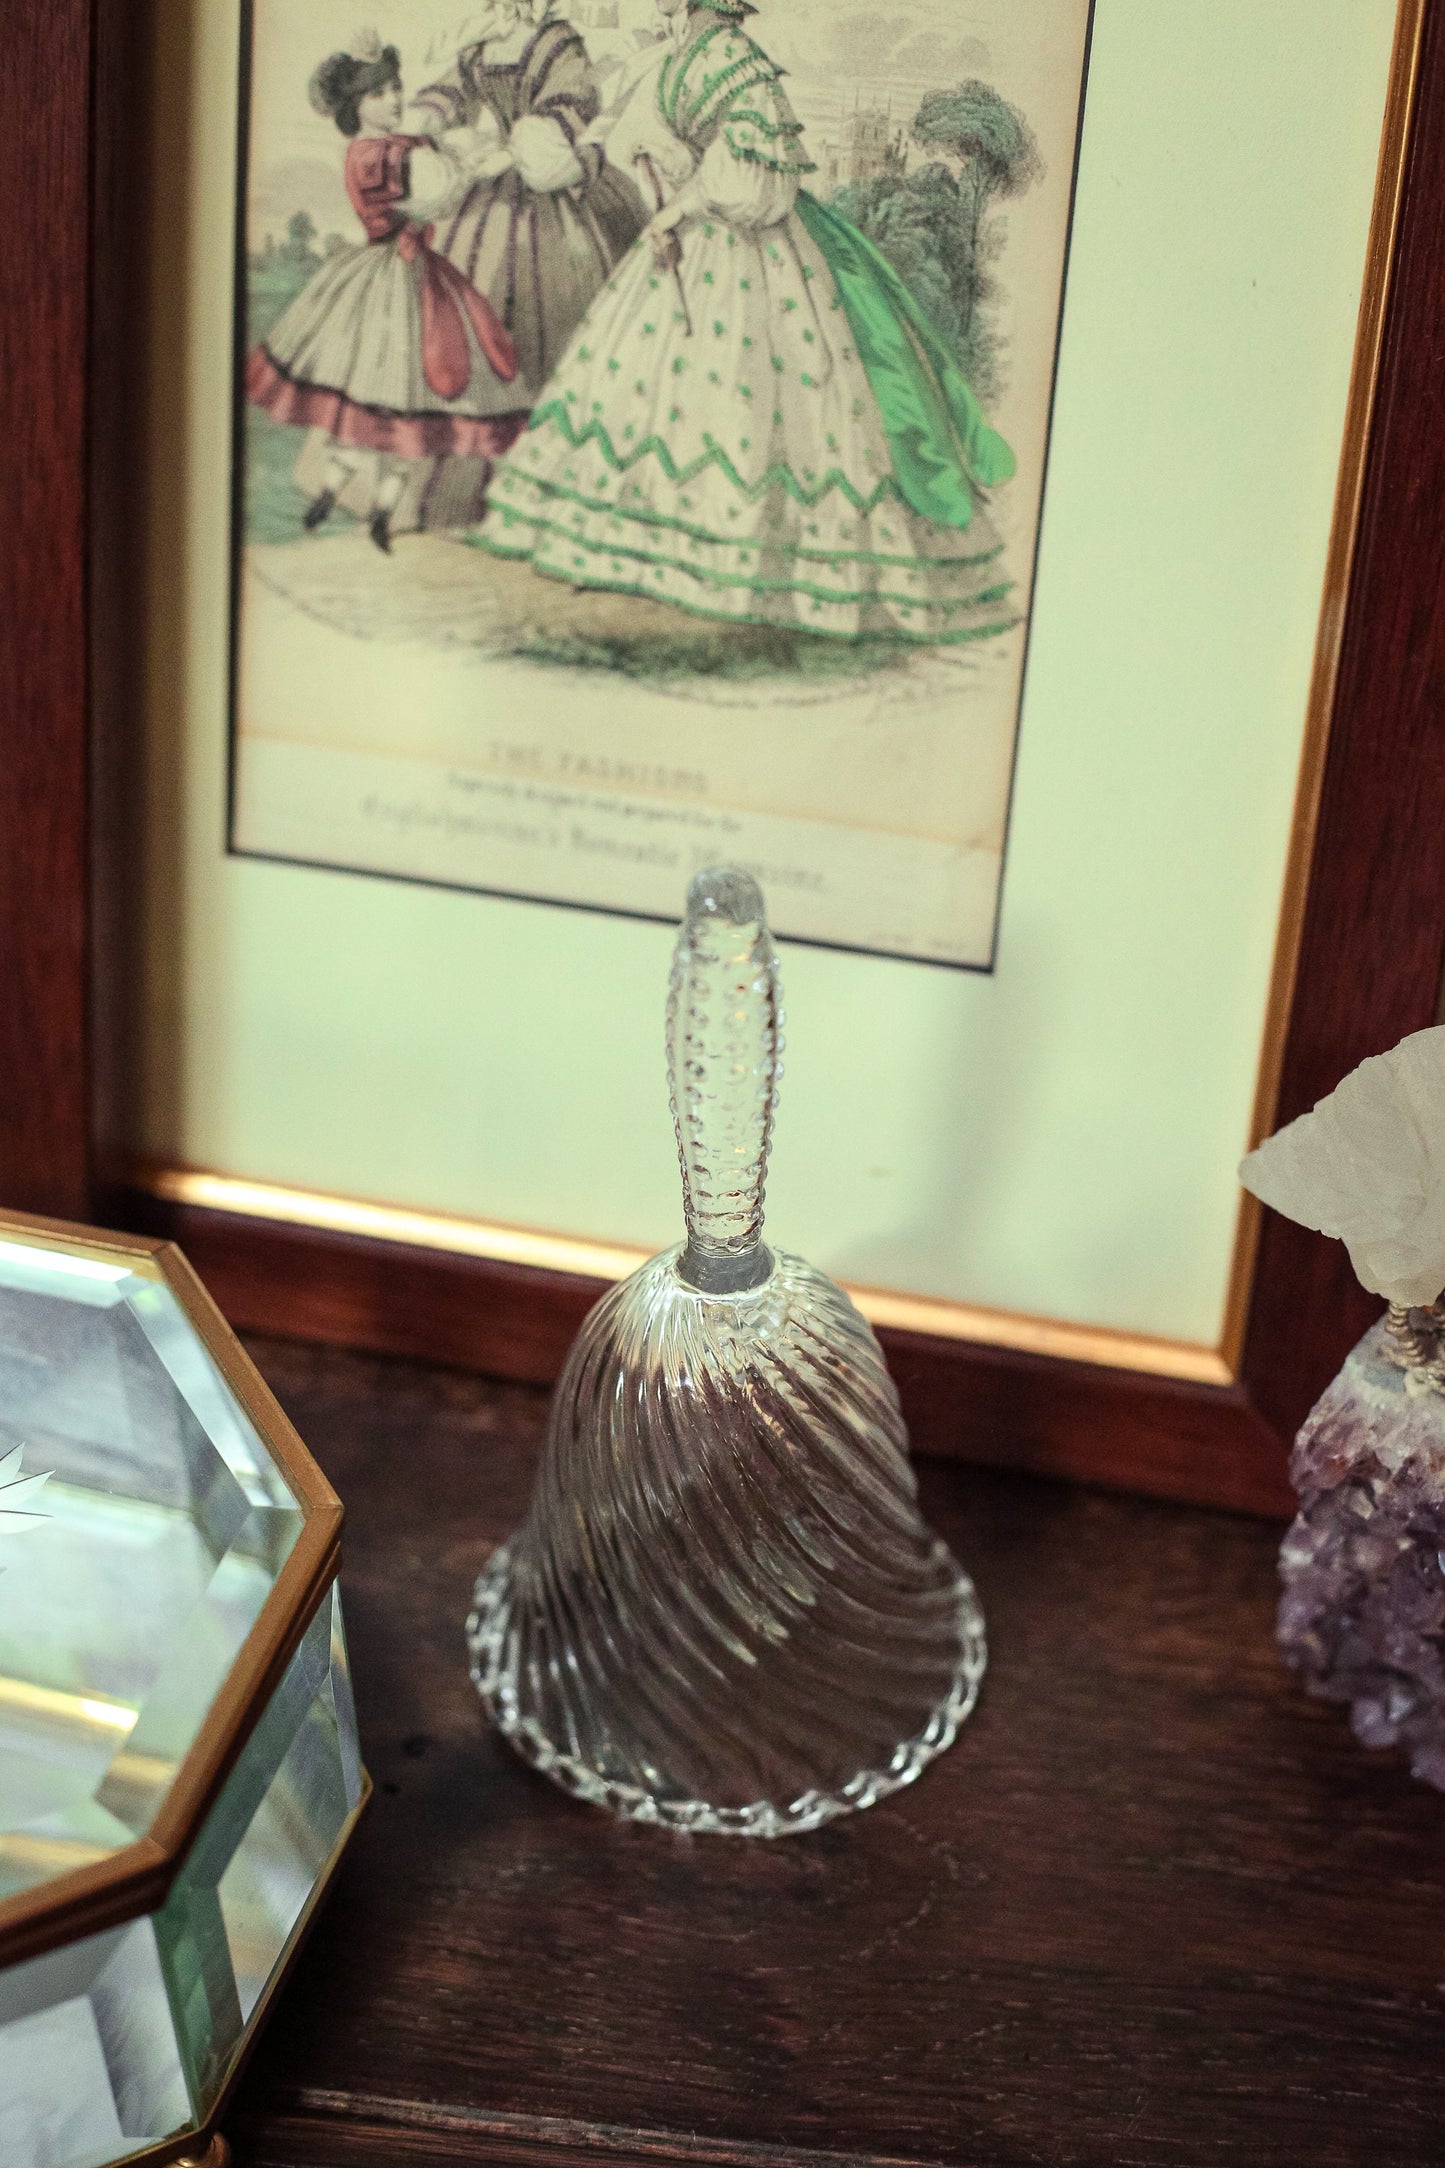 Crystal Glass Bell with Spiral & Hobnail Patterns - Vintage Crystal Bell